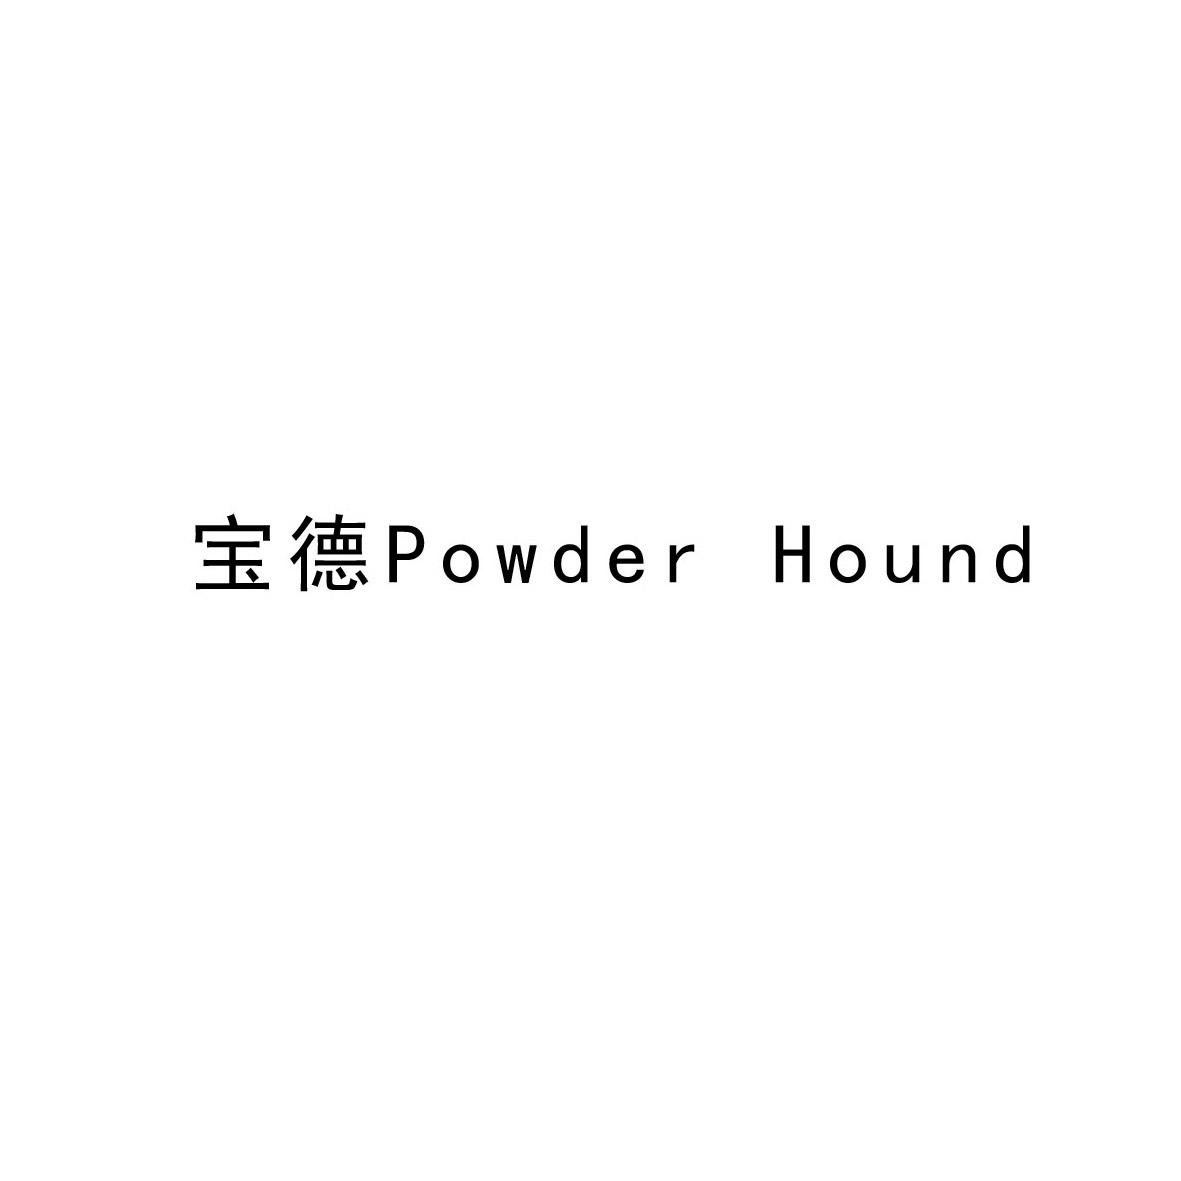 宝德 powder hound 商标公告